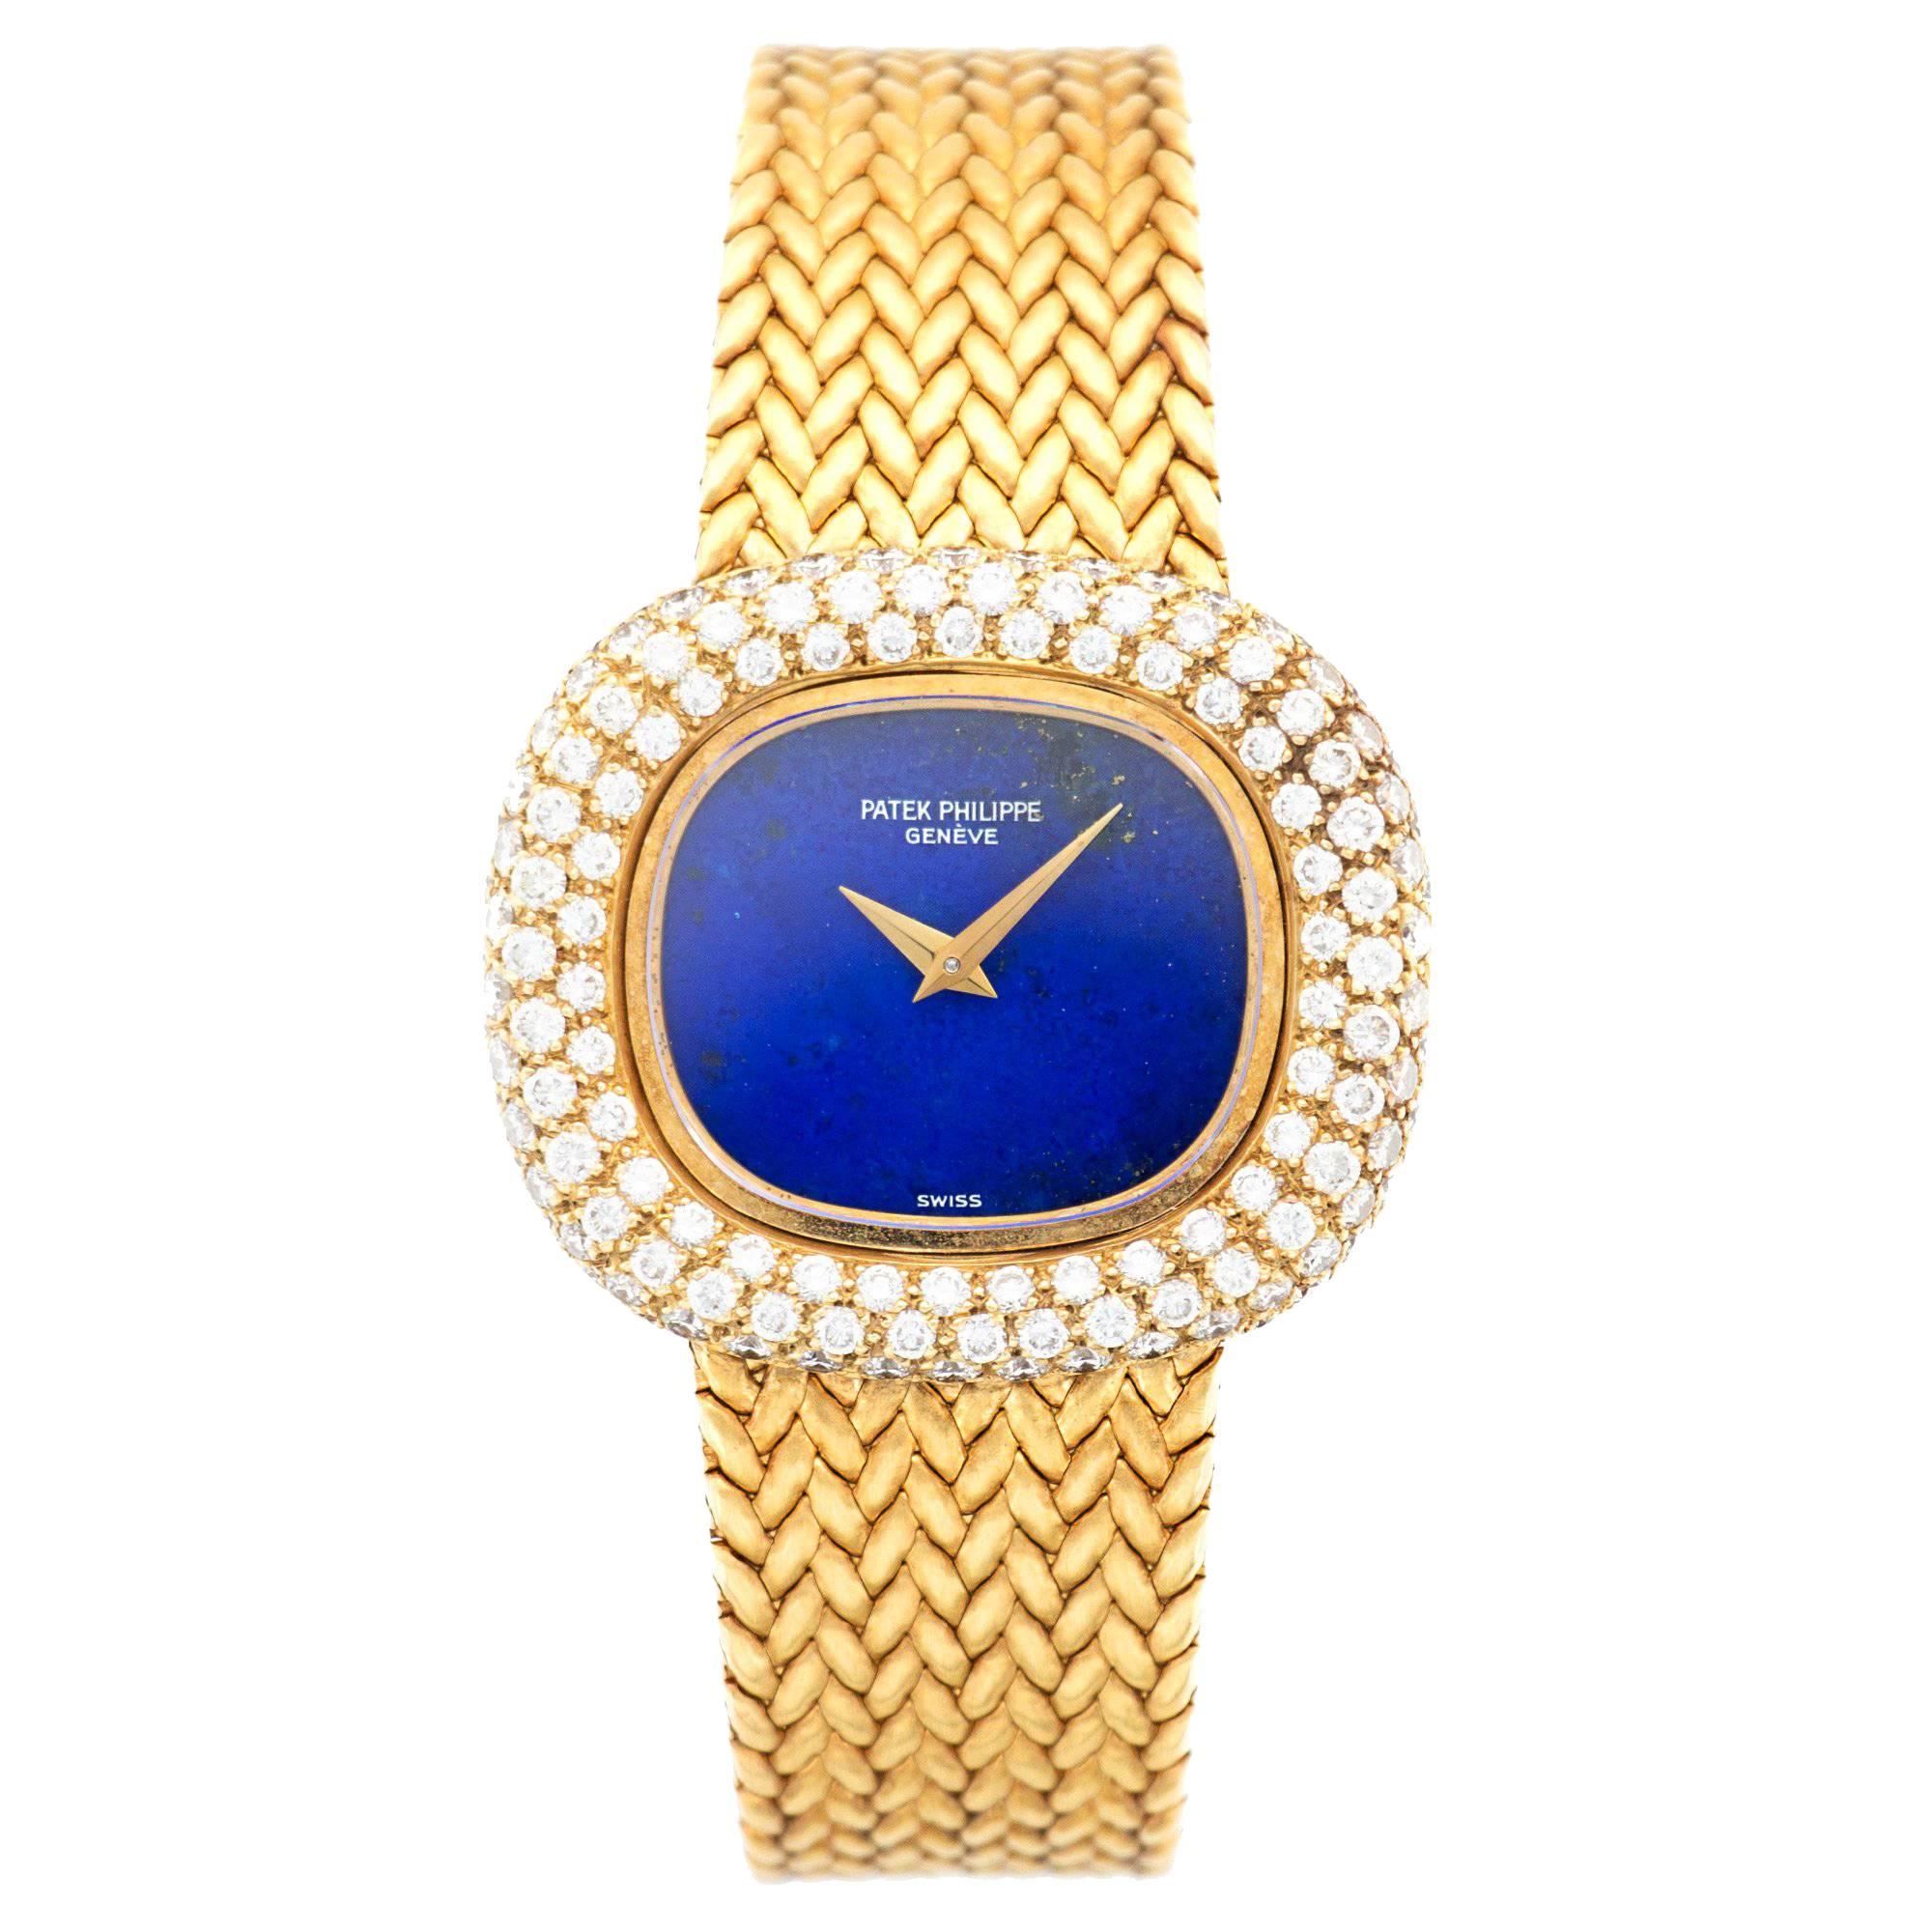 Patek Philippe Ladies Yellow Gold Diamond Manual Wind Bracelet Wristwatch 